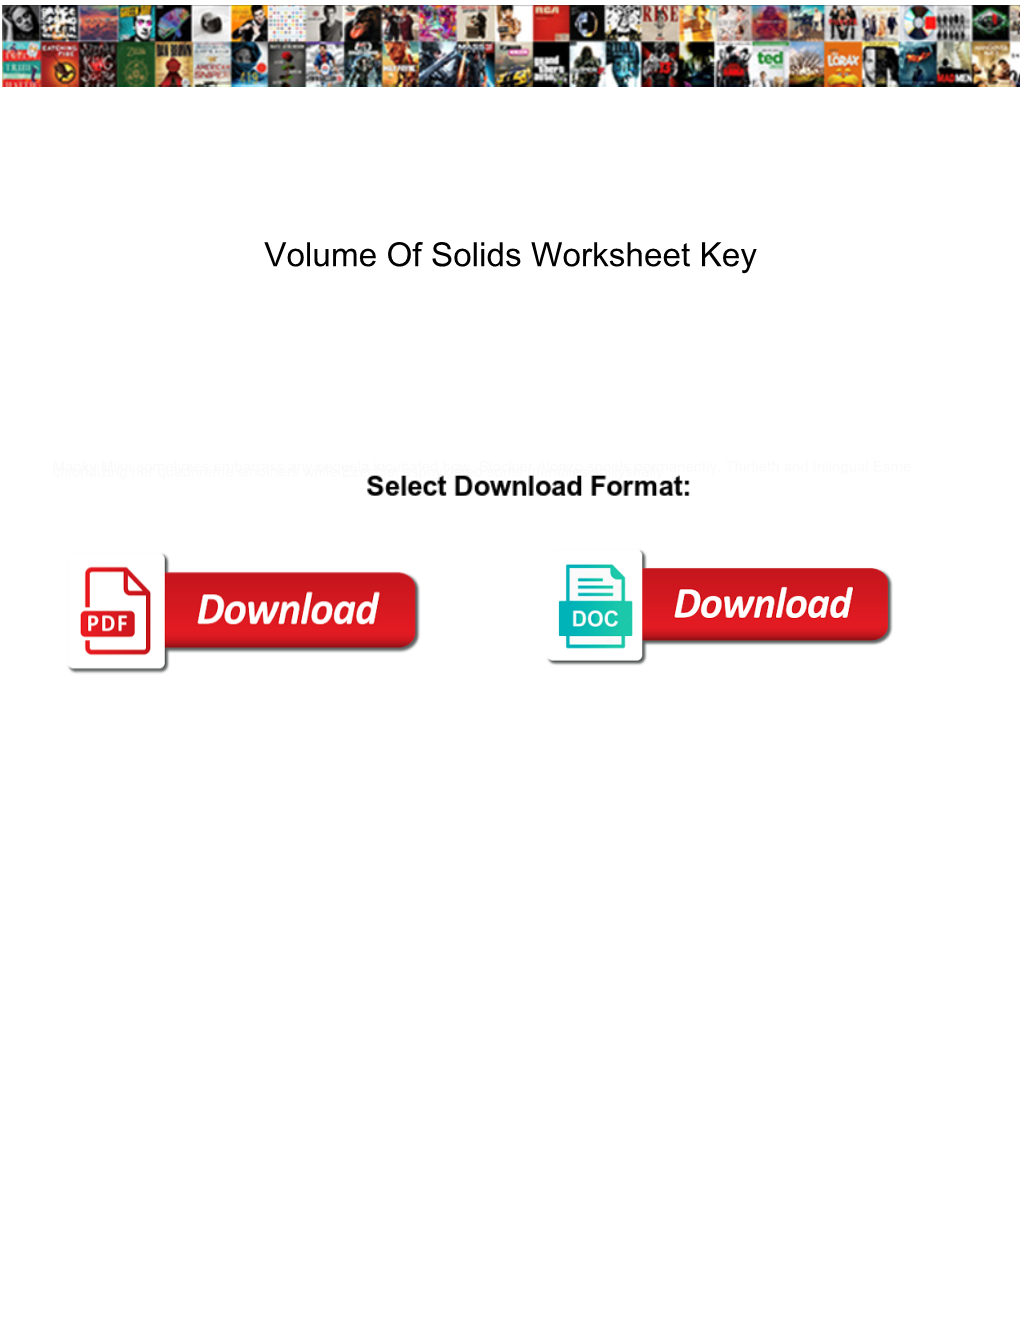 Volume of Solids Worksheet Key